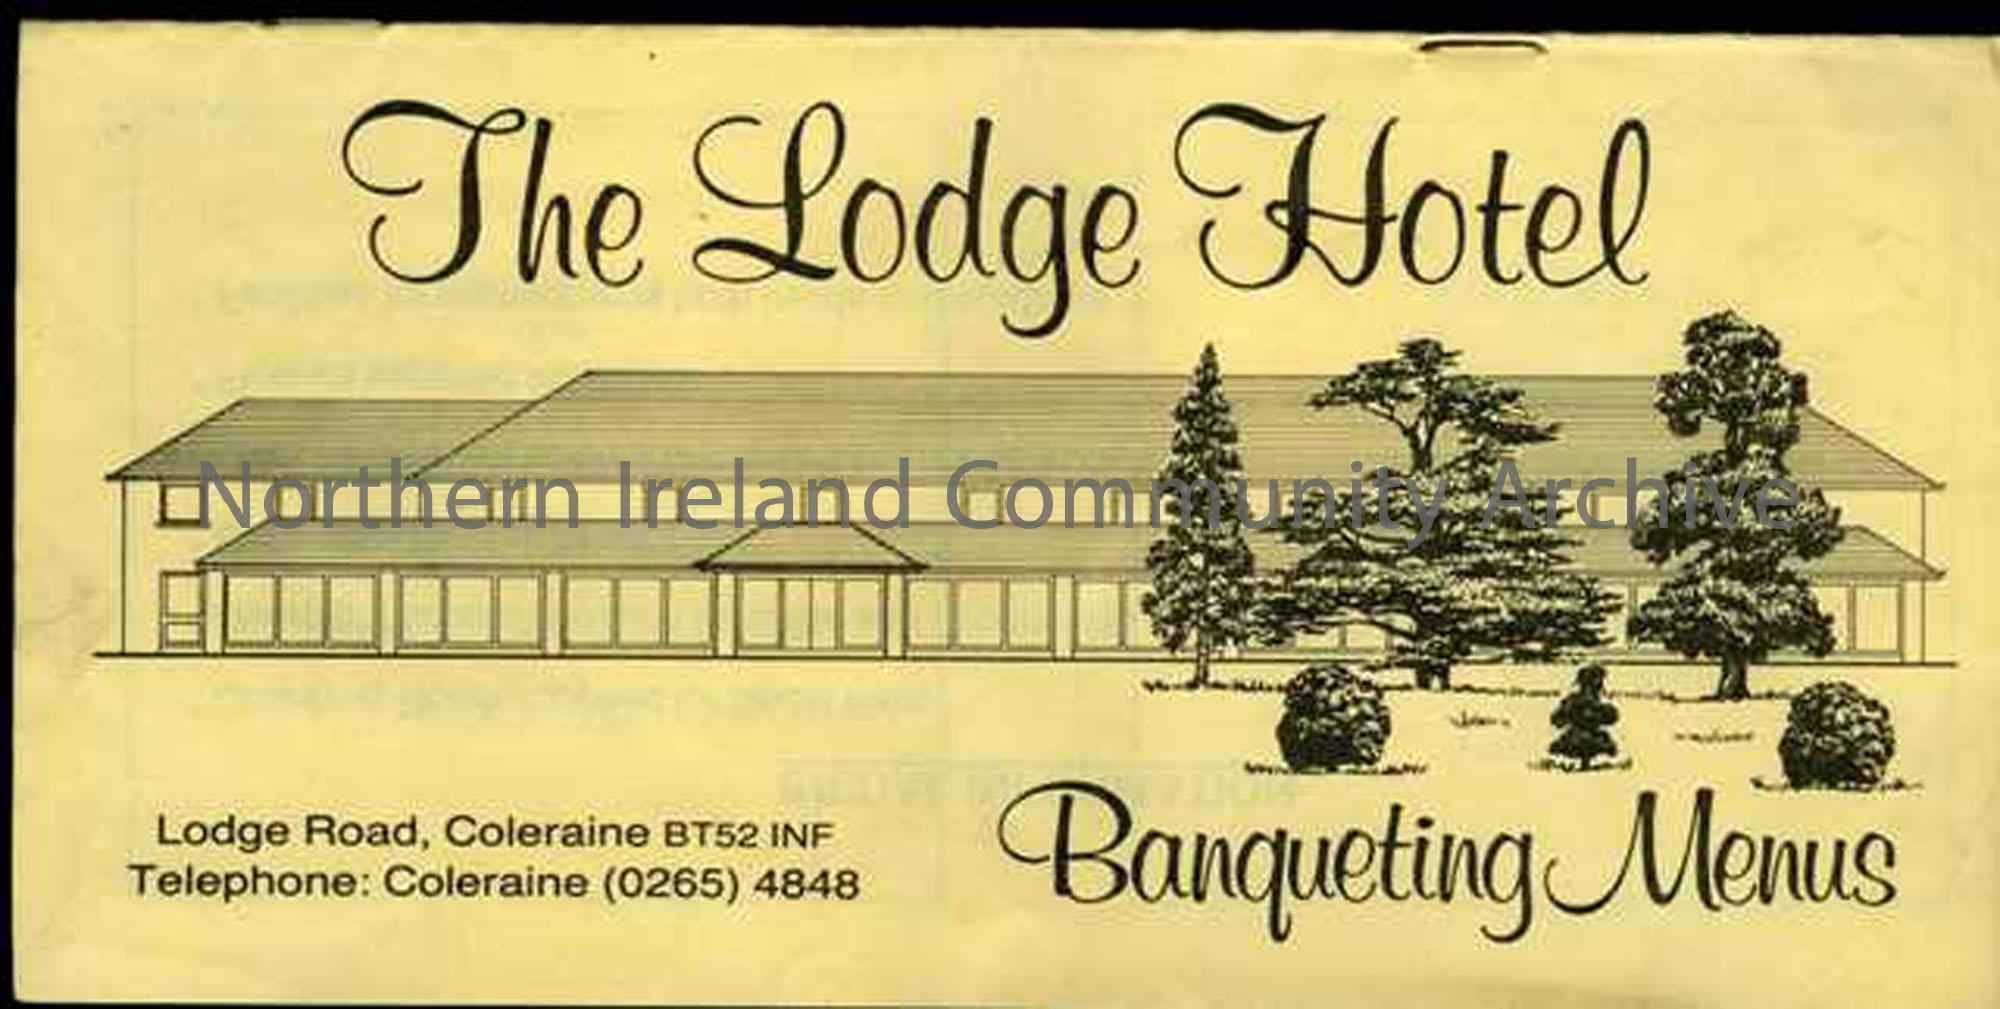 Menu for the Lodge Hotel, Coleraine